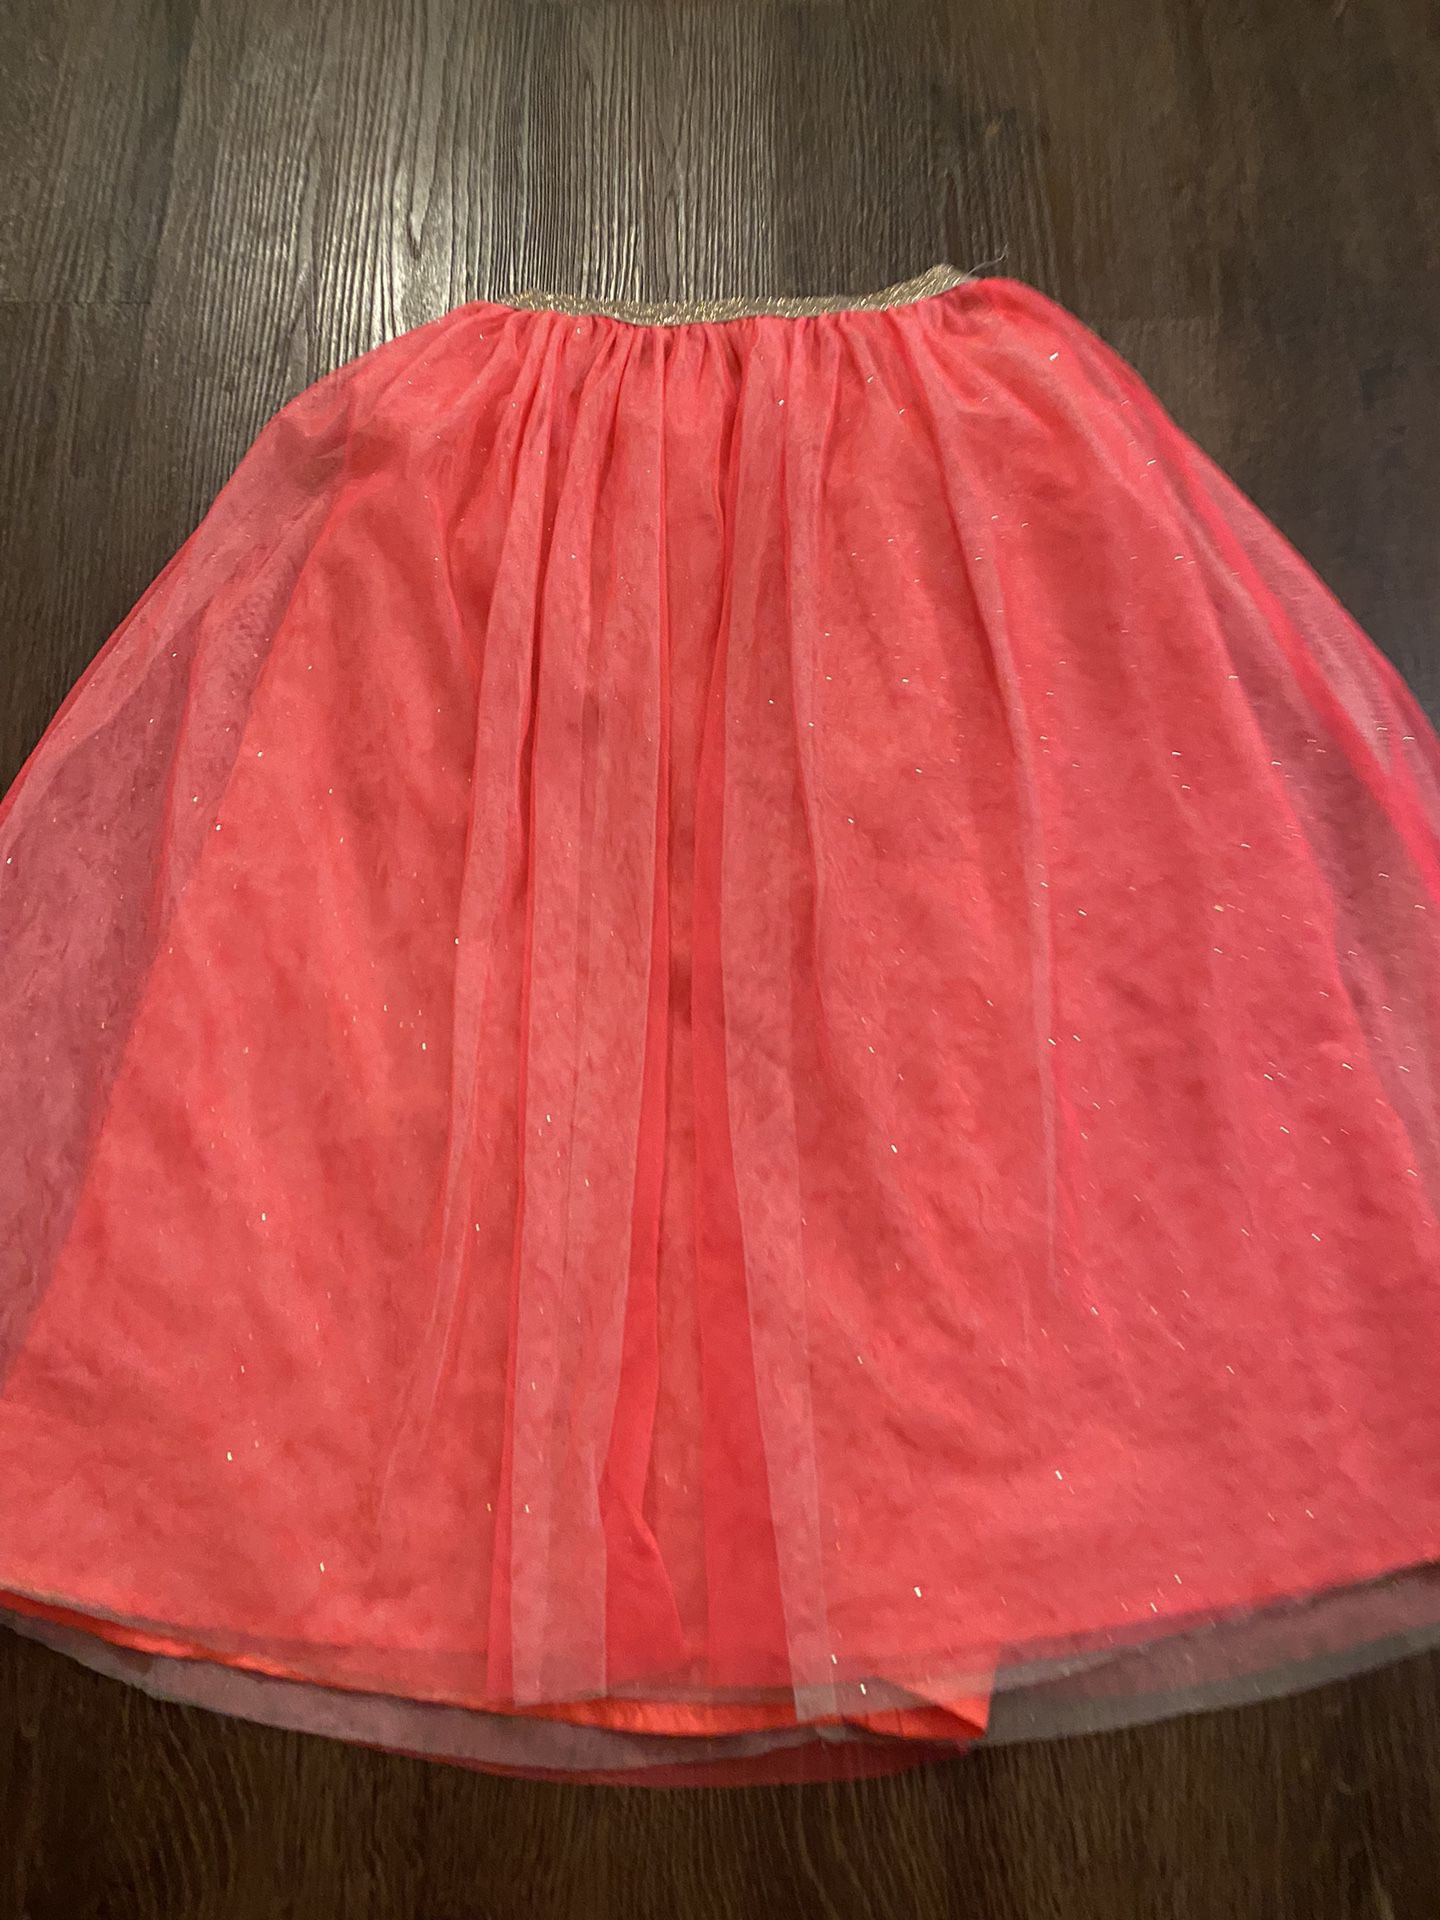 Girls Neón Orange Sparkle Long Tutu Skirt Size 6 By Cat & Jack #4